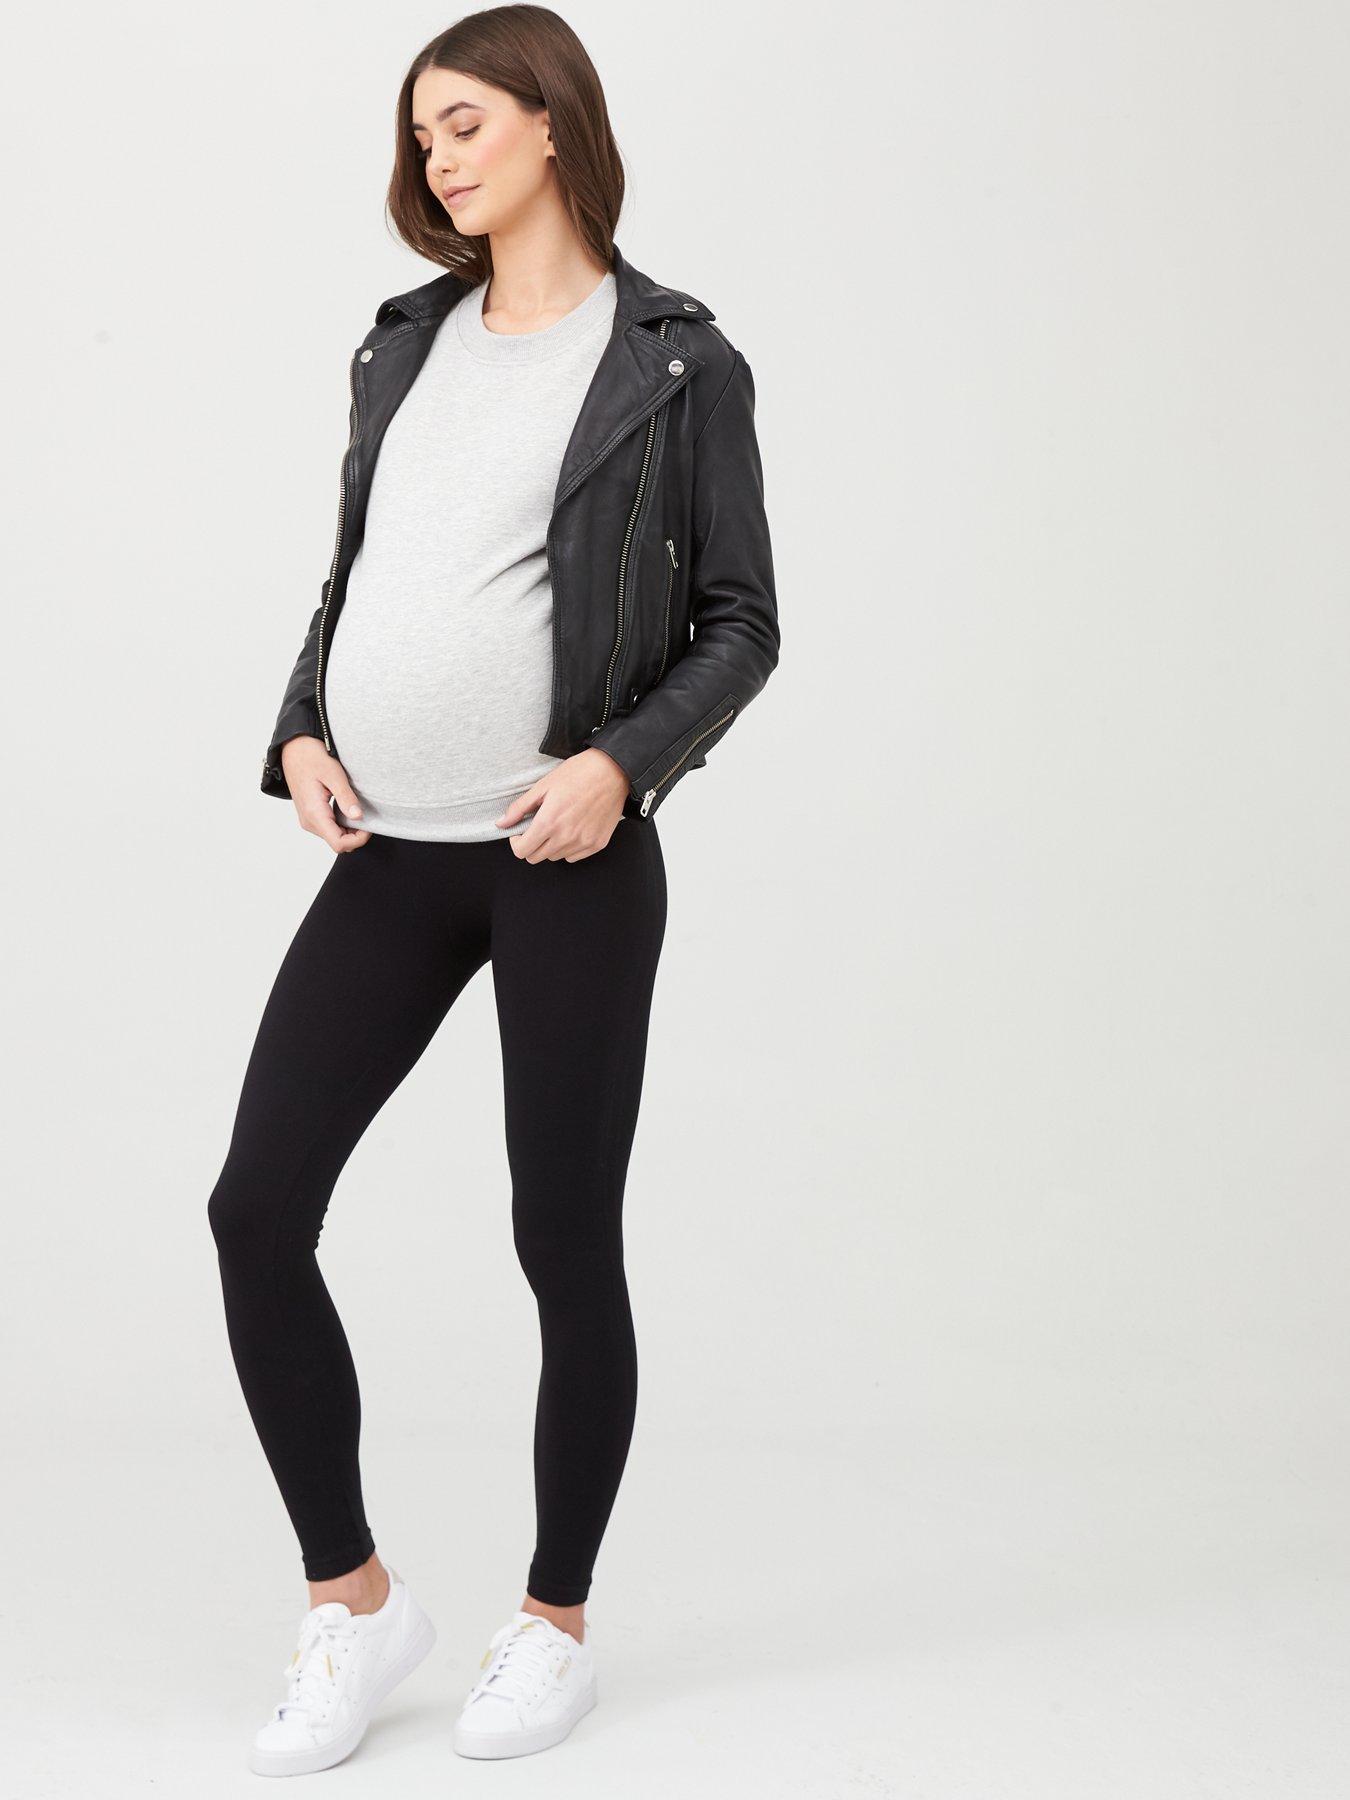 Spanx Assets Maternity Shaping Tights Size 1 Black Soft Waistband | eBay